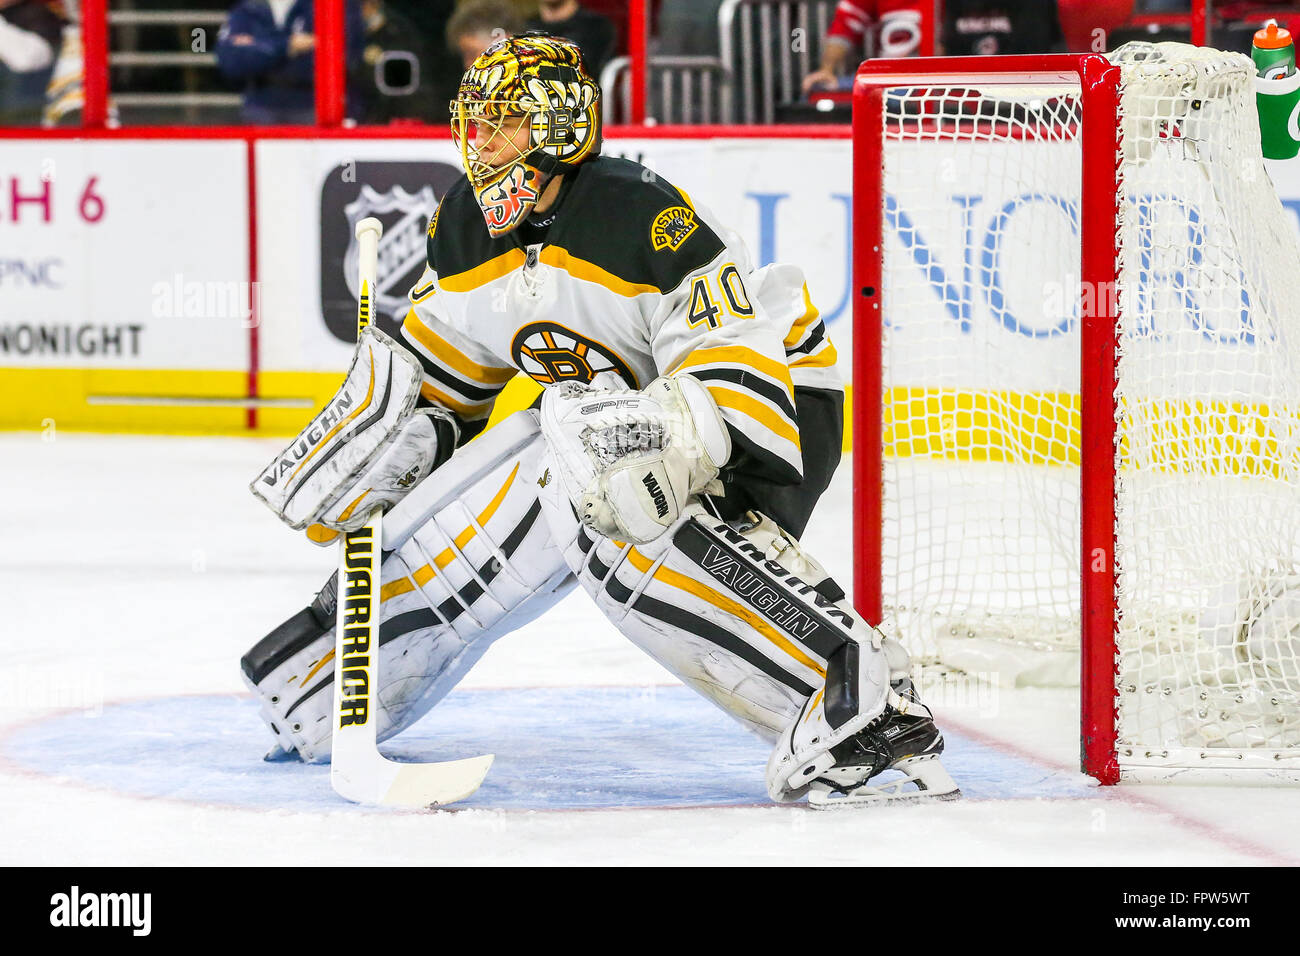 Jaromir Jagr's goal lifts the Boston Bruins